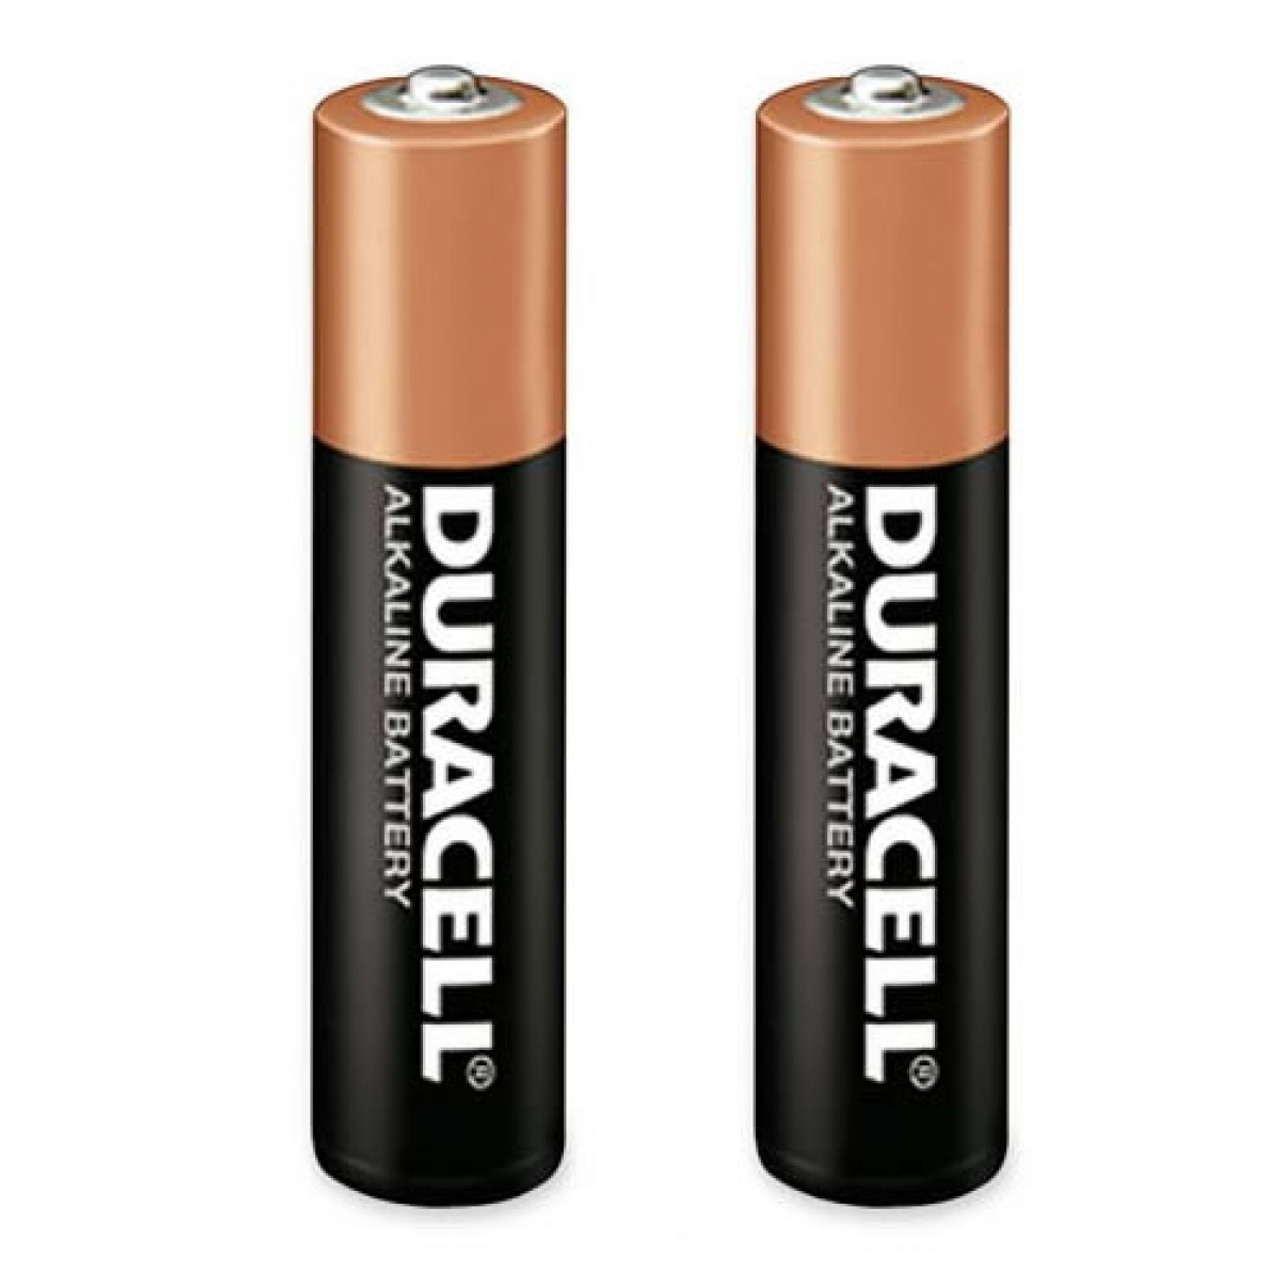 Aa battery. Батарейки Duracell AA lr3. 2 Батарейки ААА Дюрасел. Батарейка Duracell Basic AA. Элемент питания Duracell ААА.